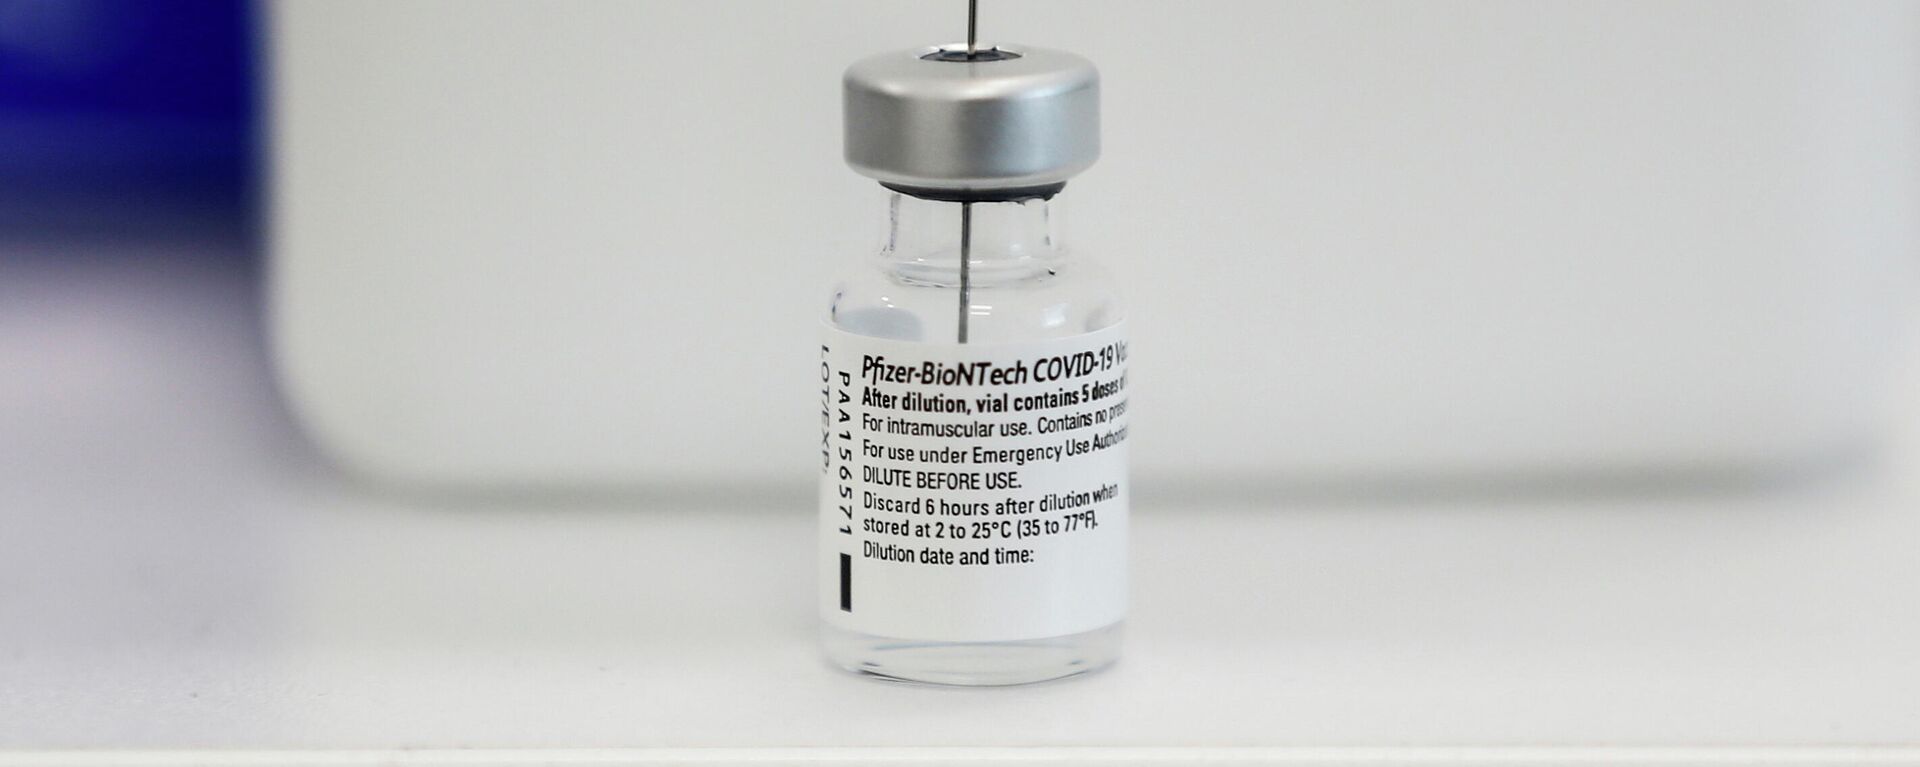 Vacuna contra COVID-19 de Pfizer - Sputnik Mundo, 1920, 20.05.2021